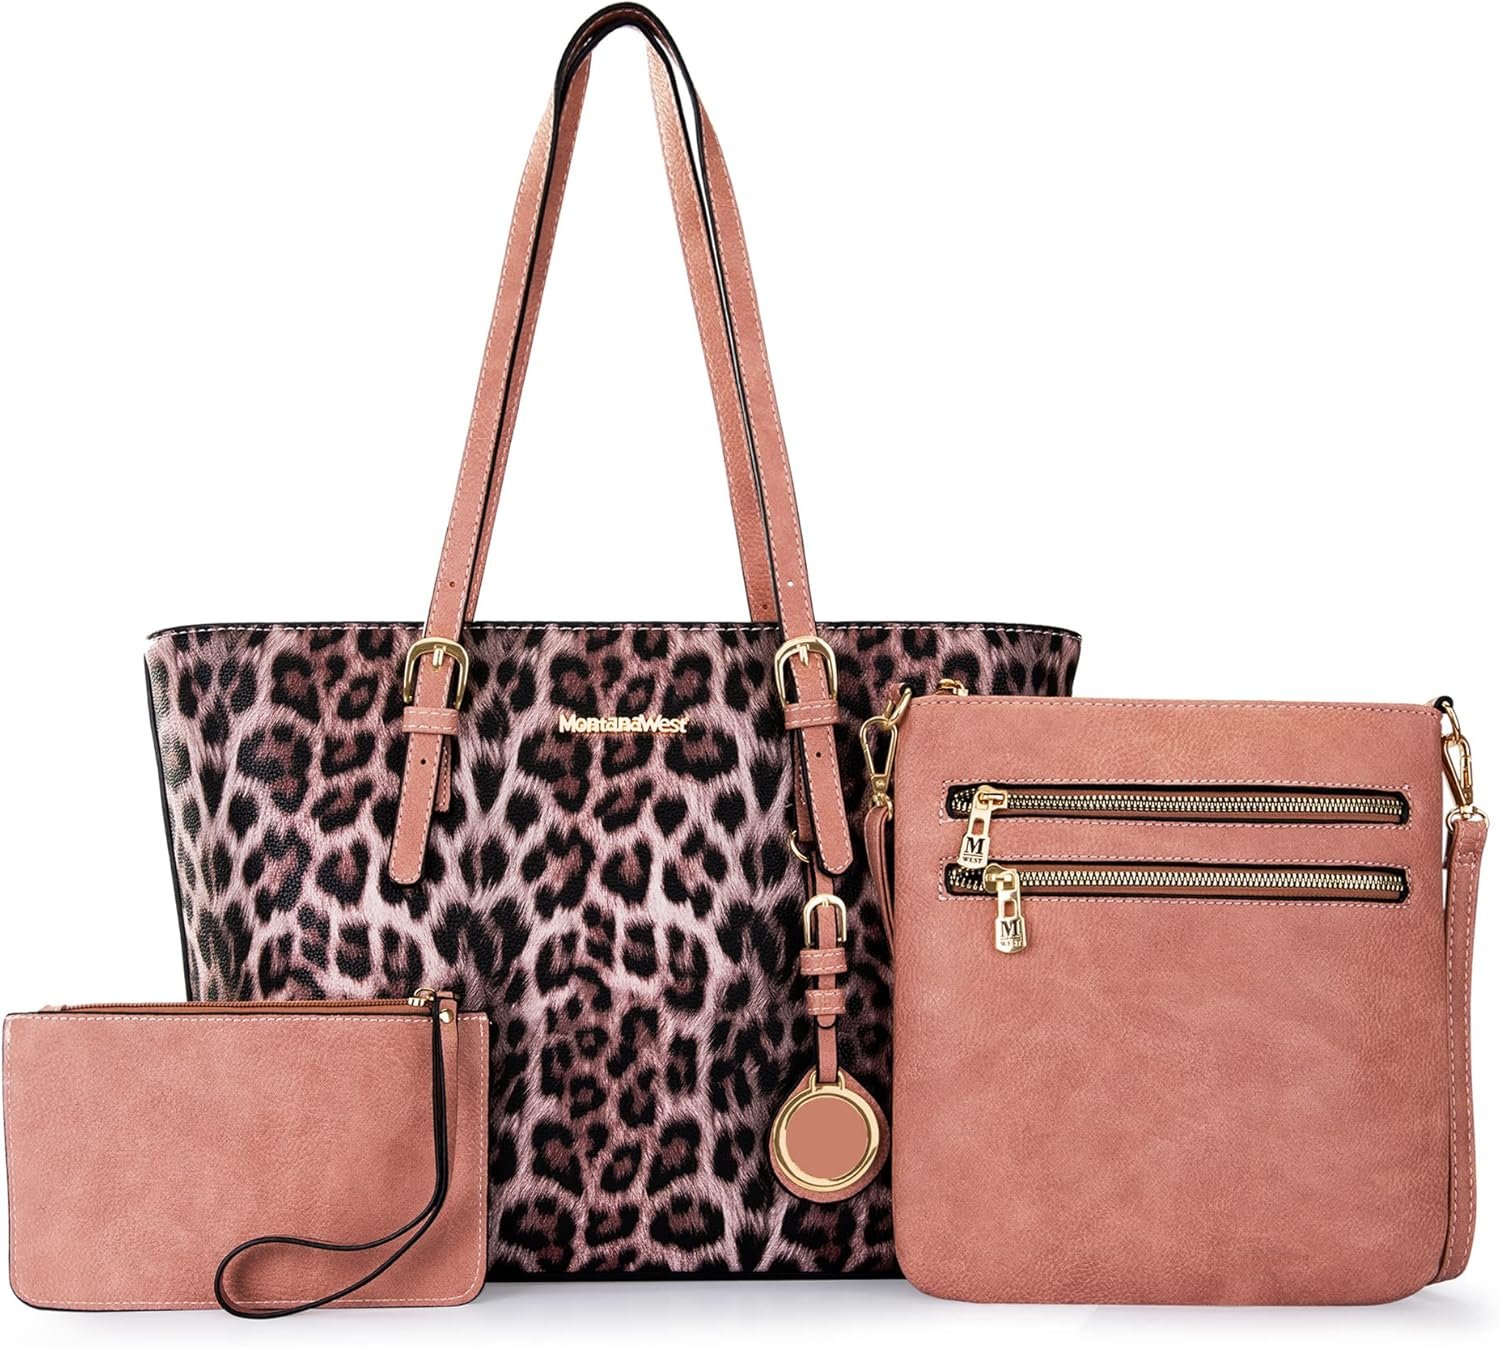 Leopard Print Satchel Handbags Review